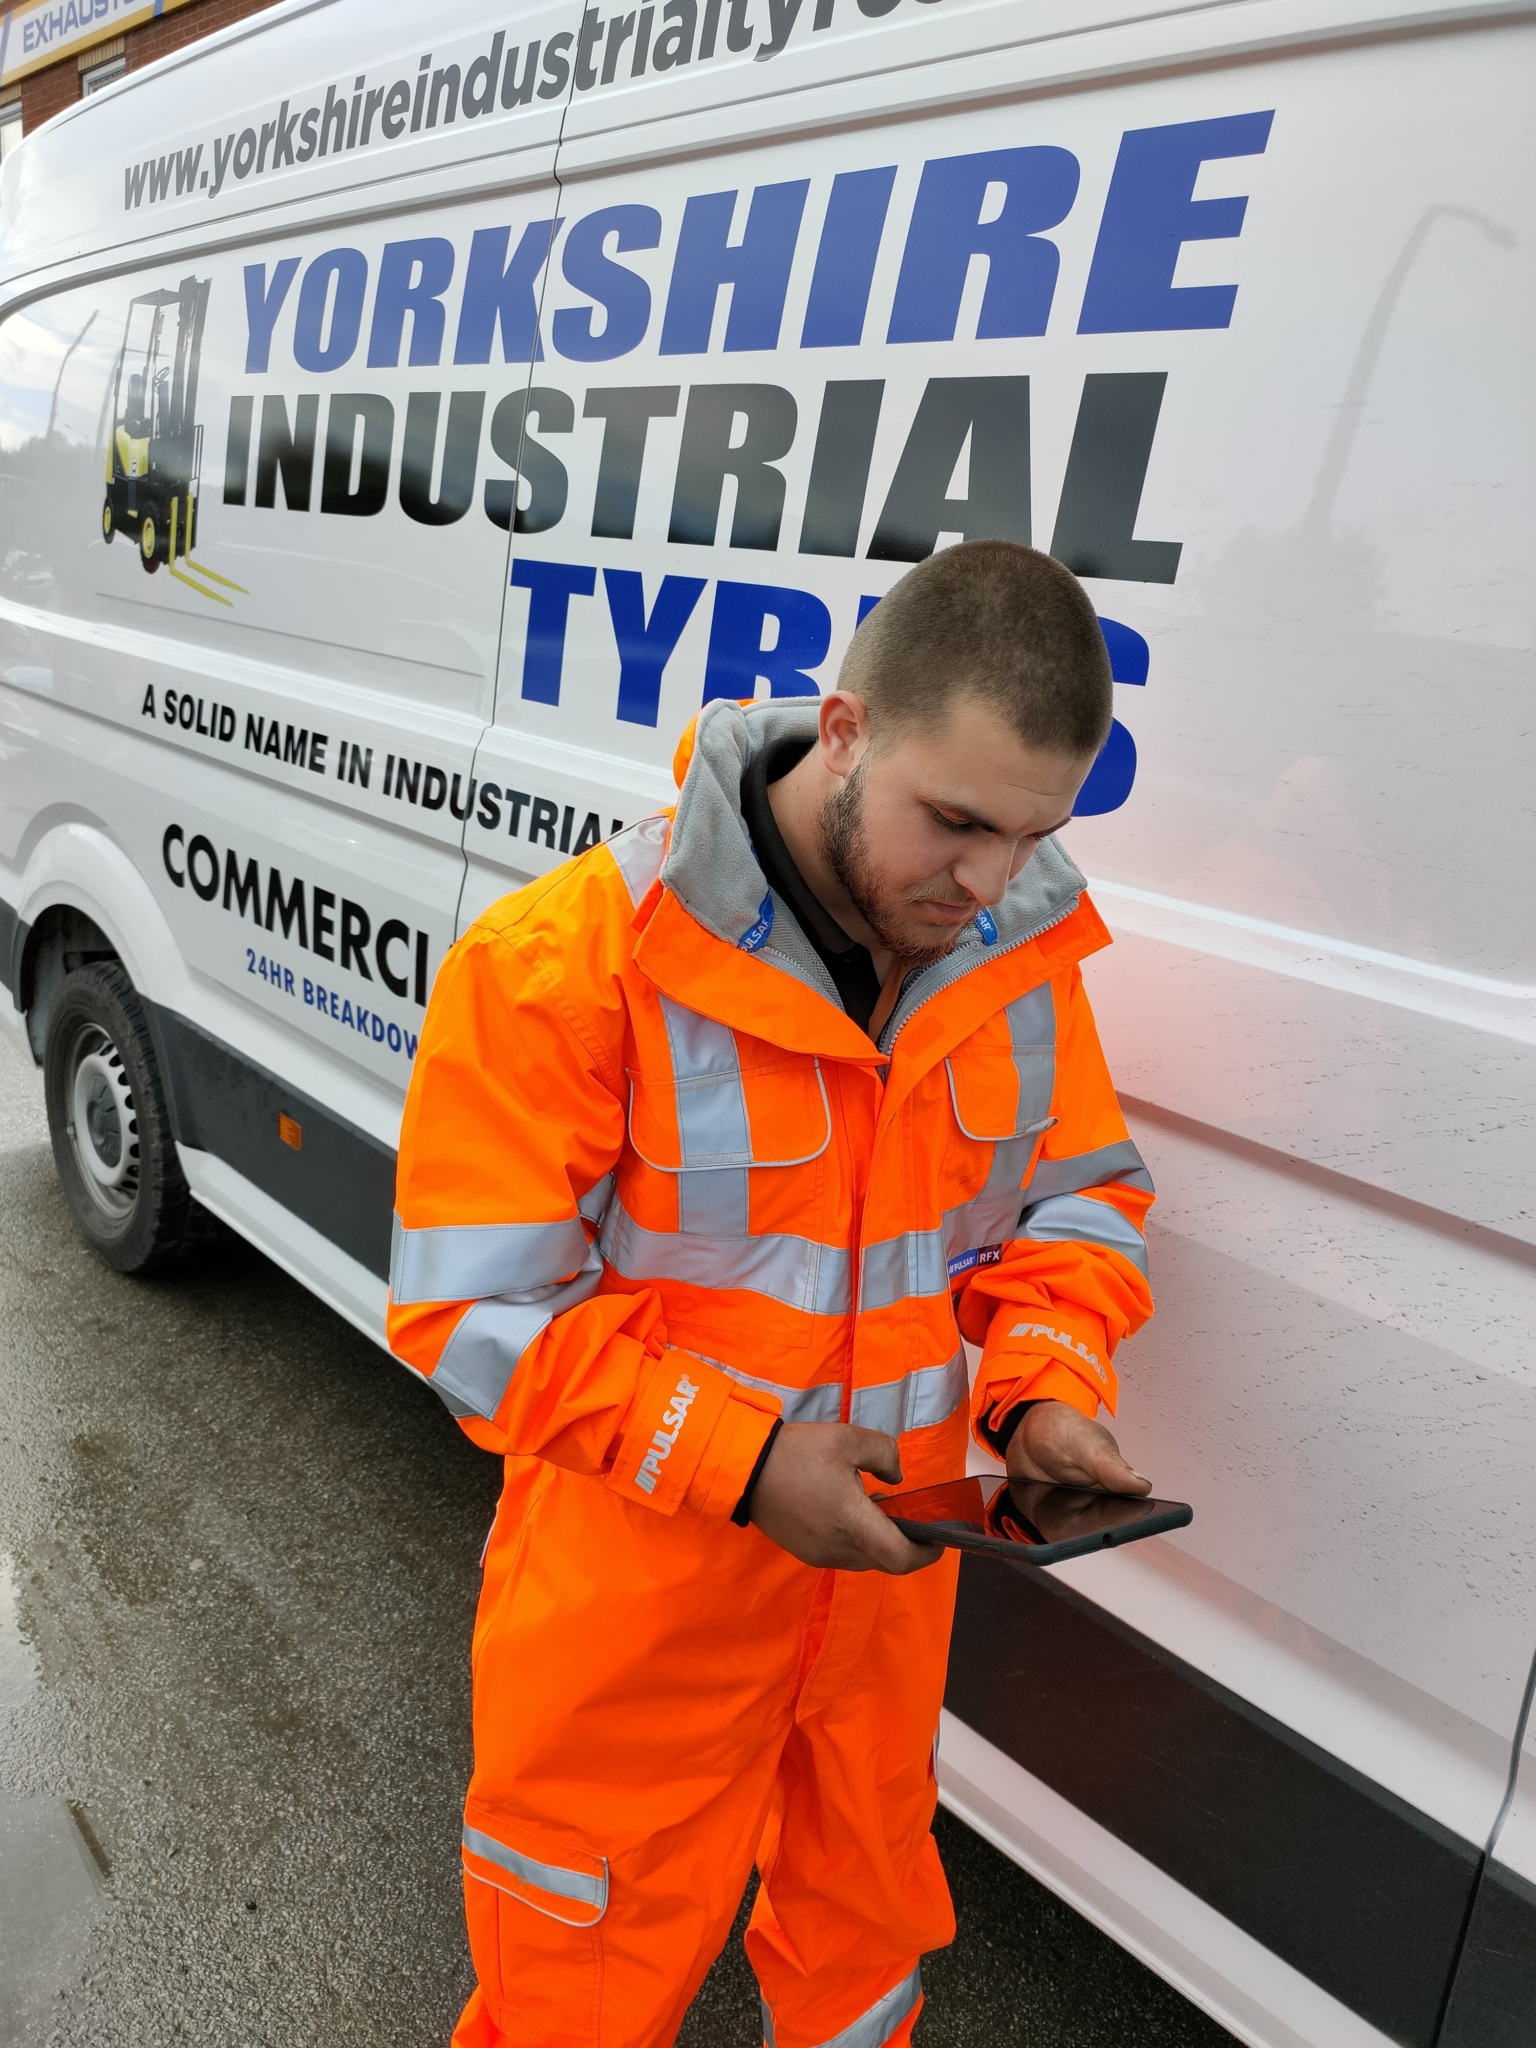 Yorkshire Industrial Tyres adds UniSerV Call Logging/e-jobsheet combination